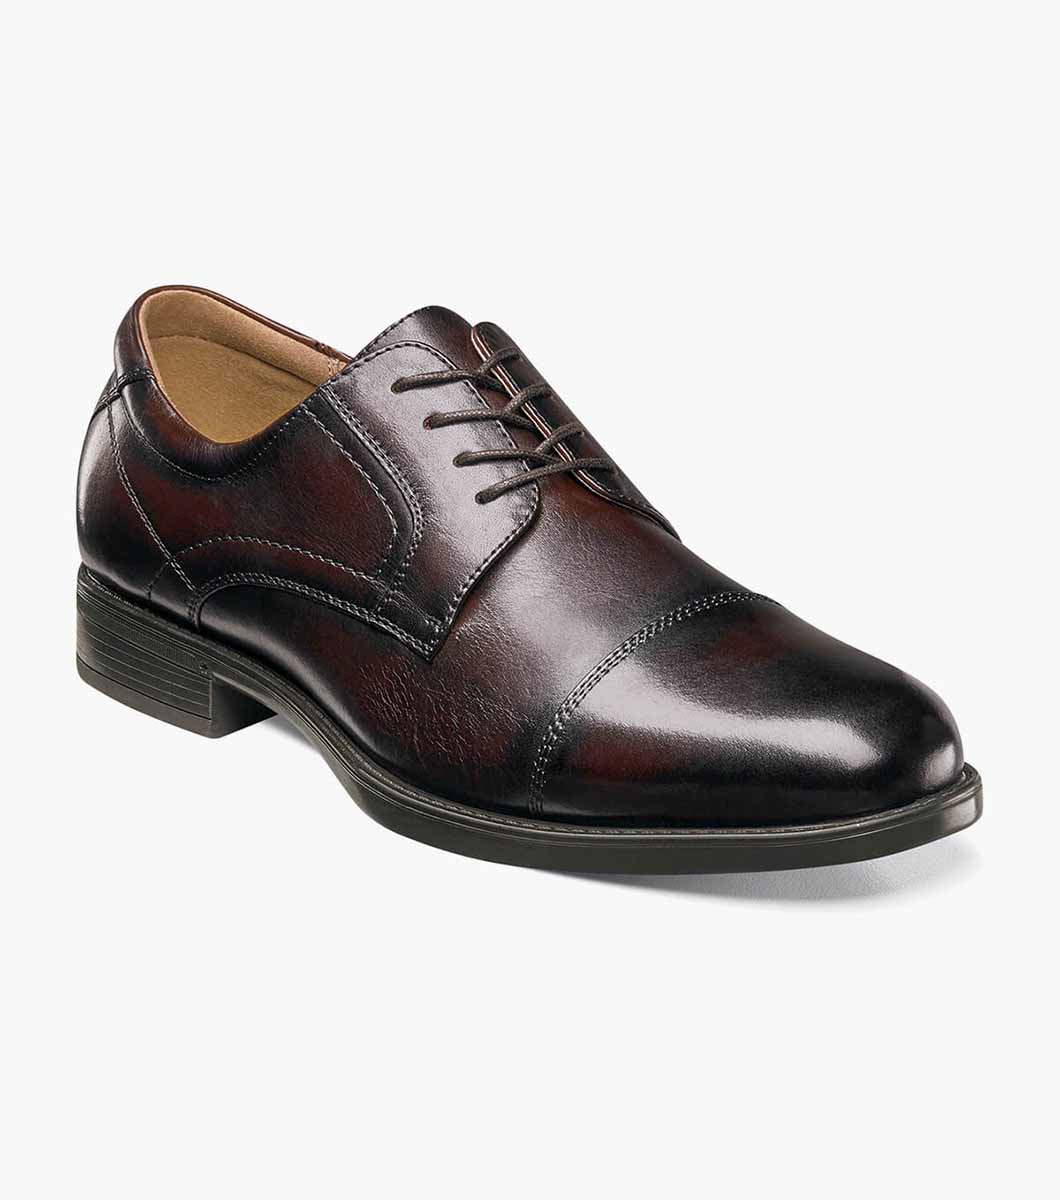 Florsheim Finley Cap Oxford 11181-247 Mens Brown Dress Oxfords Shoes 10 